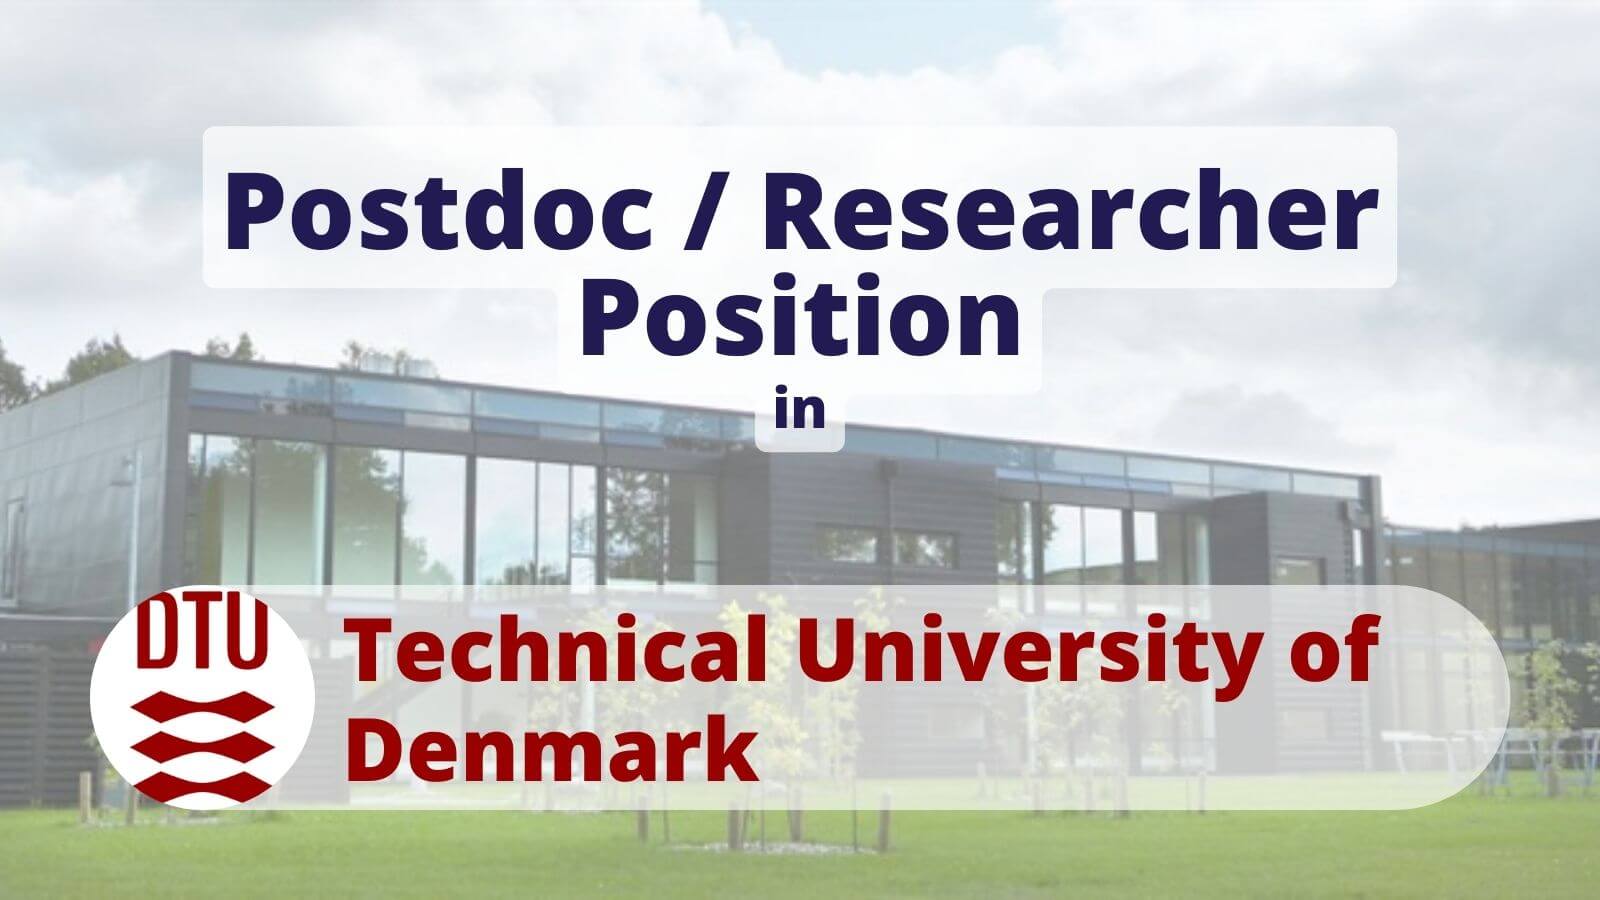 Postdoc or Researcher Position in DTU Technical University of Denmark